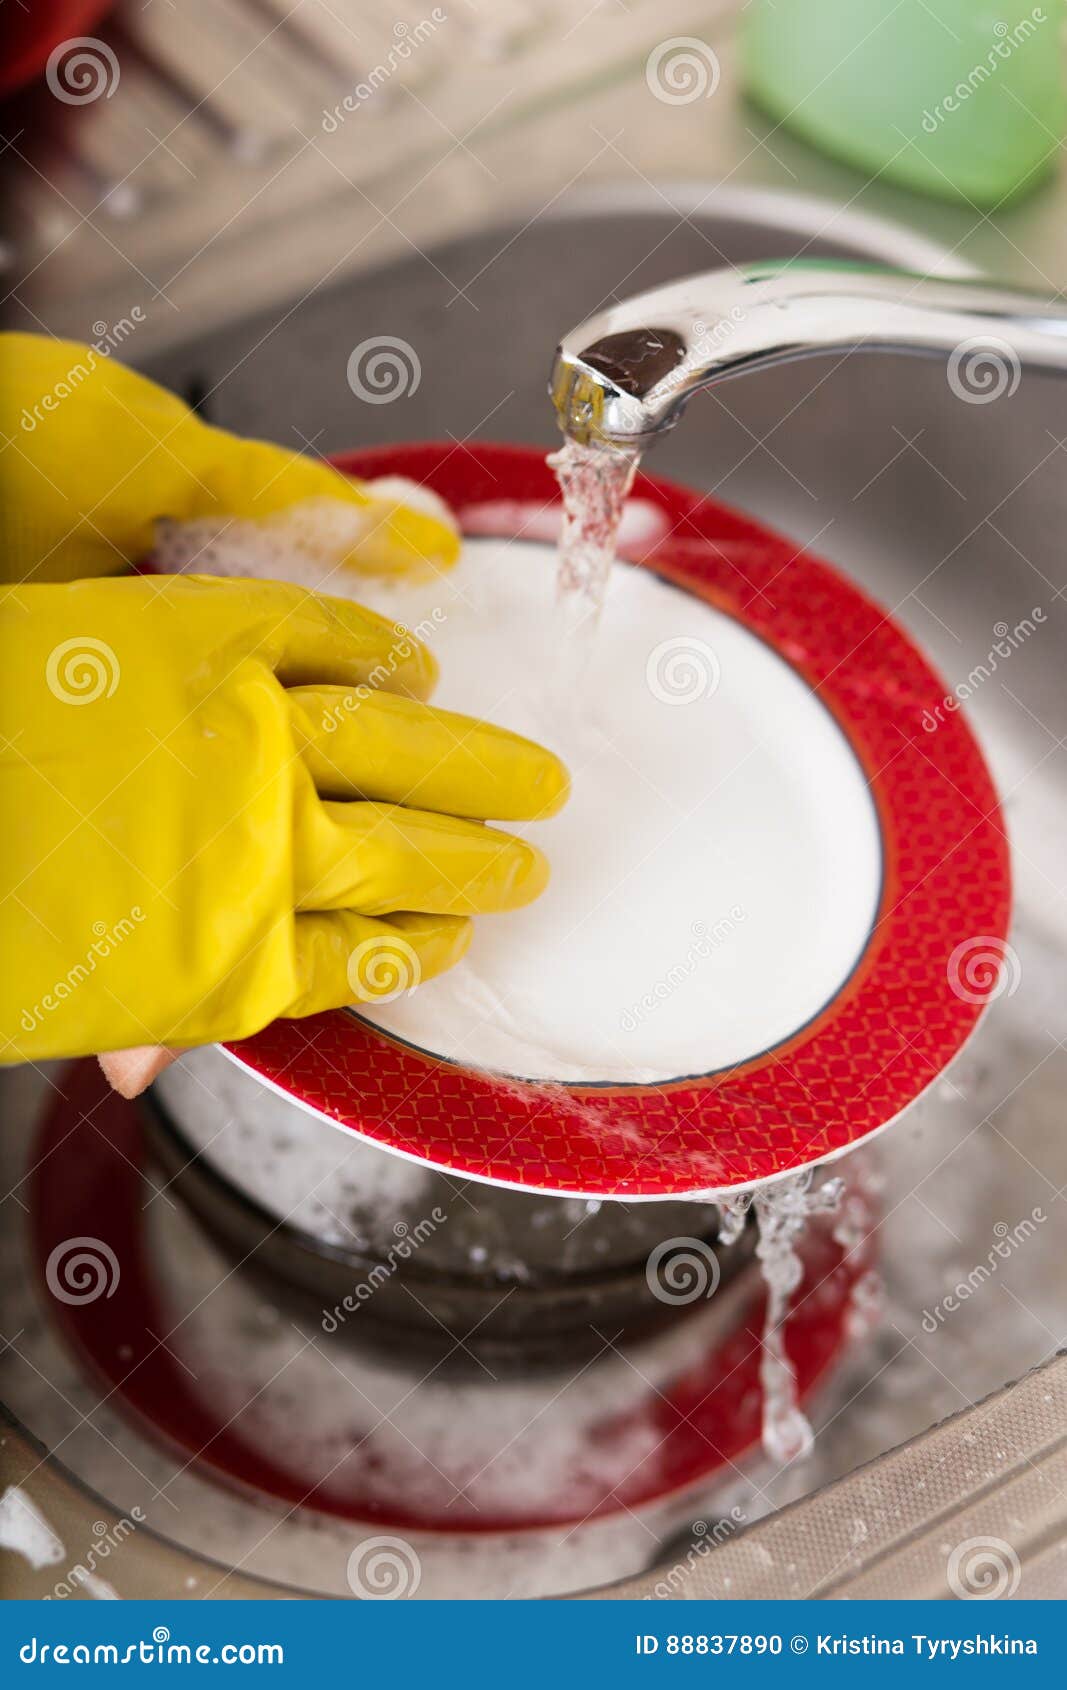 Cleaning Dishware Kitchen Sink Sponge Washing Dish Close Up